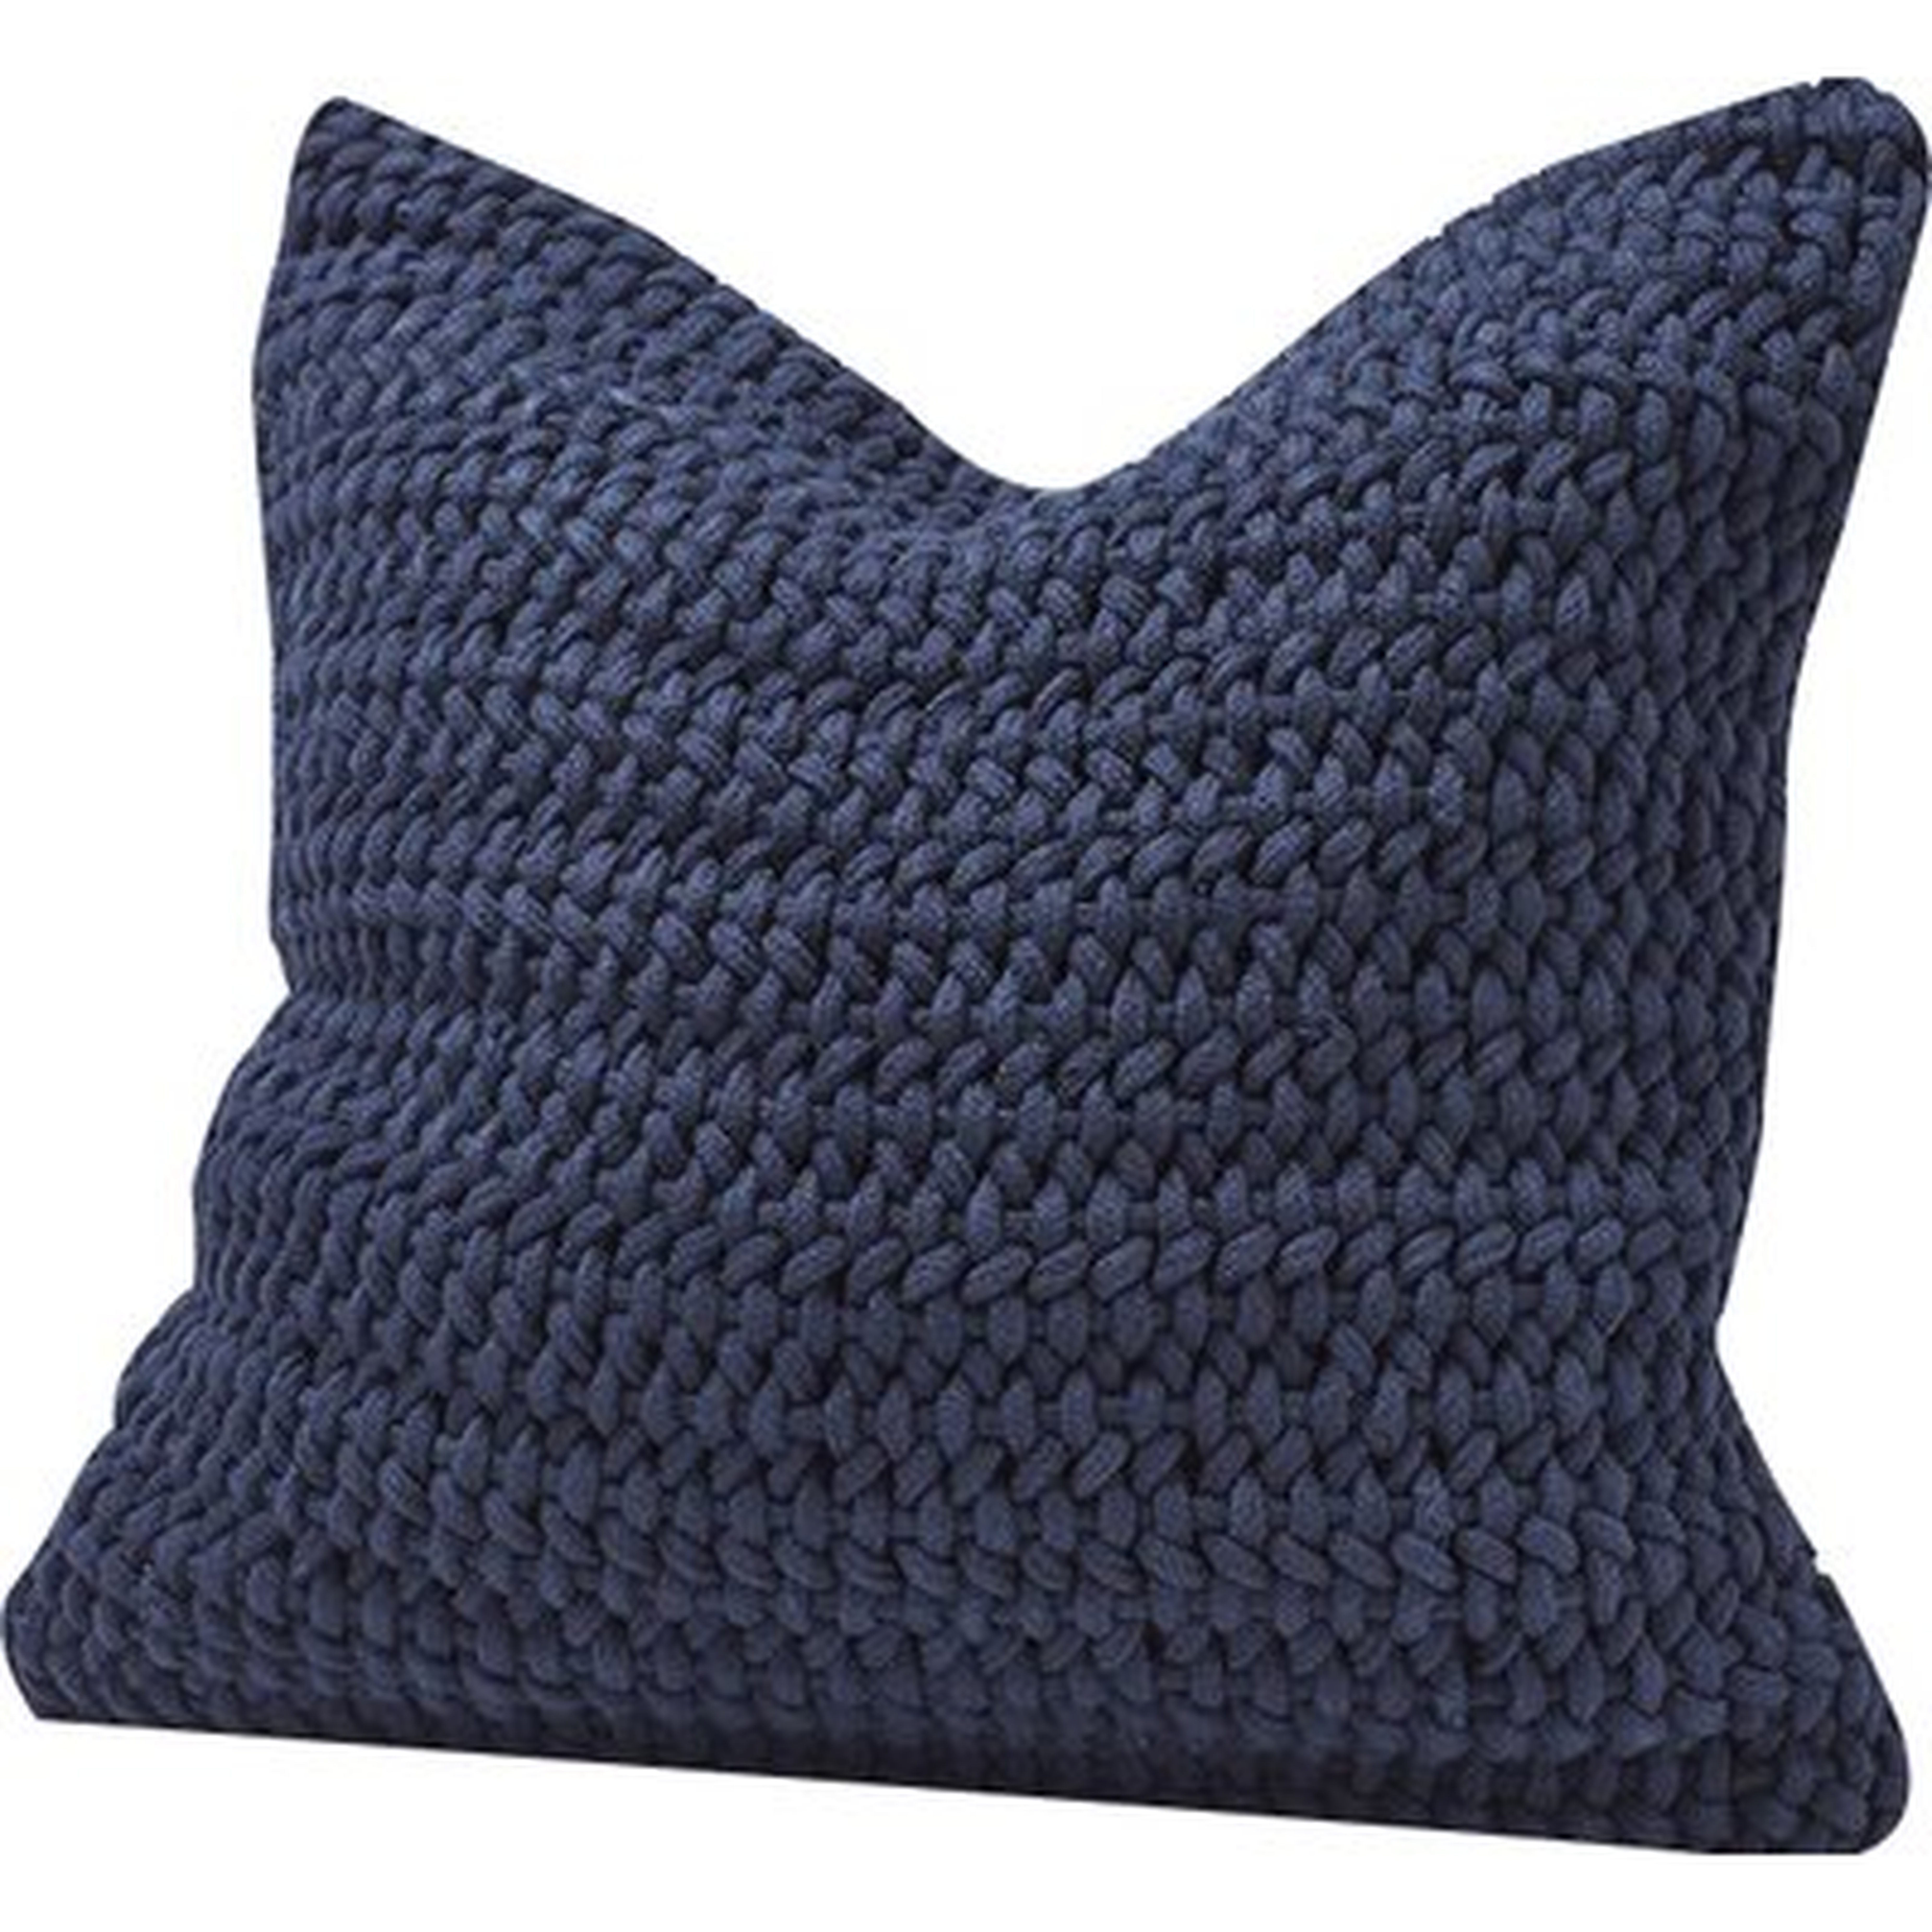 Woven Rope Cotton Throw Pillow Cover - AllModern